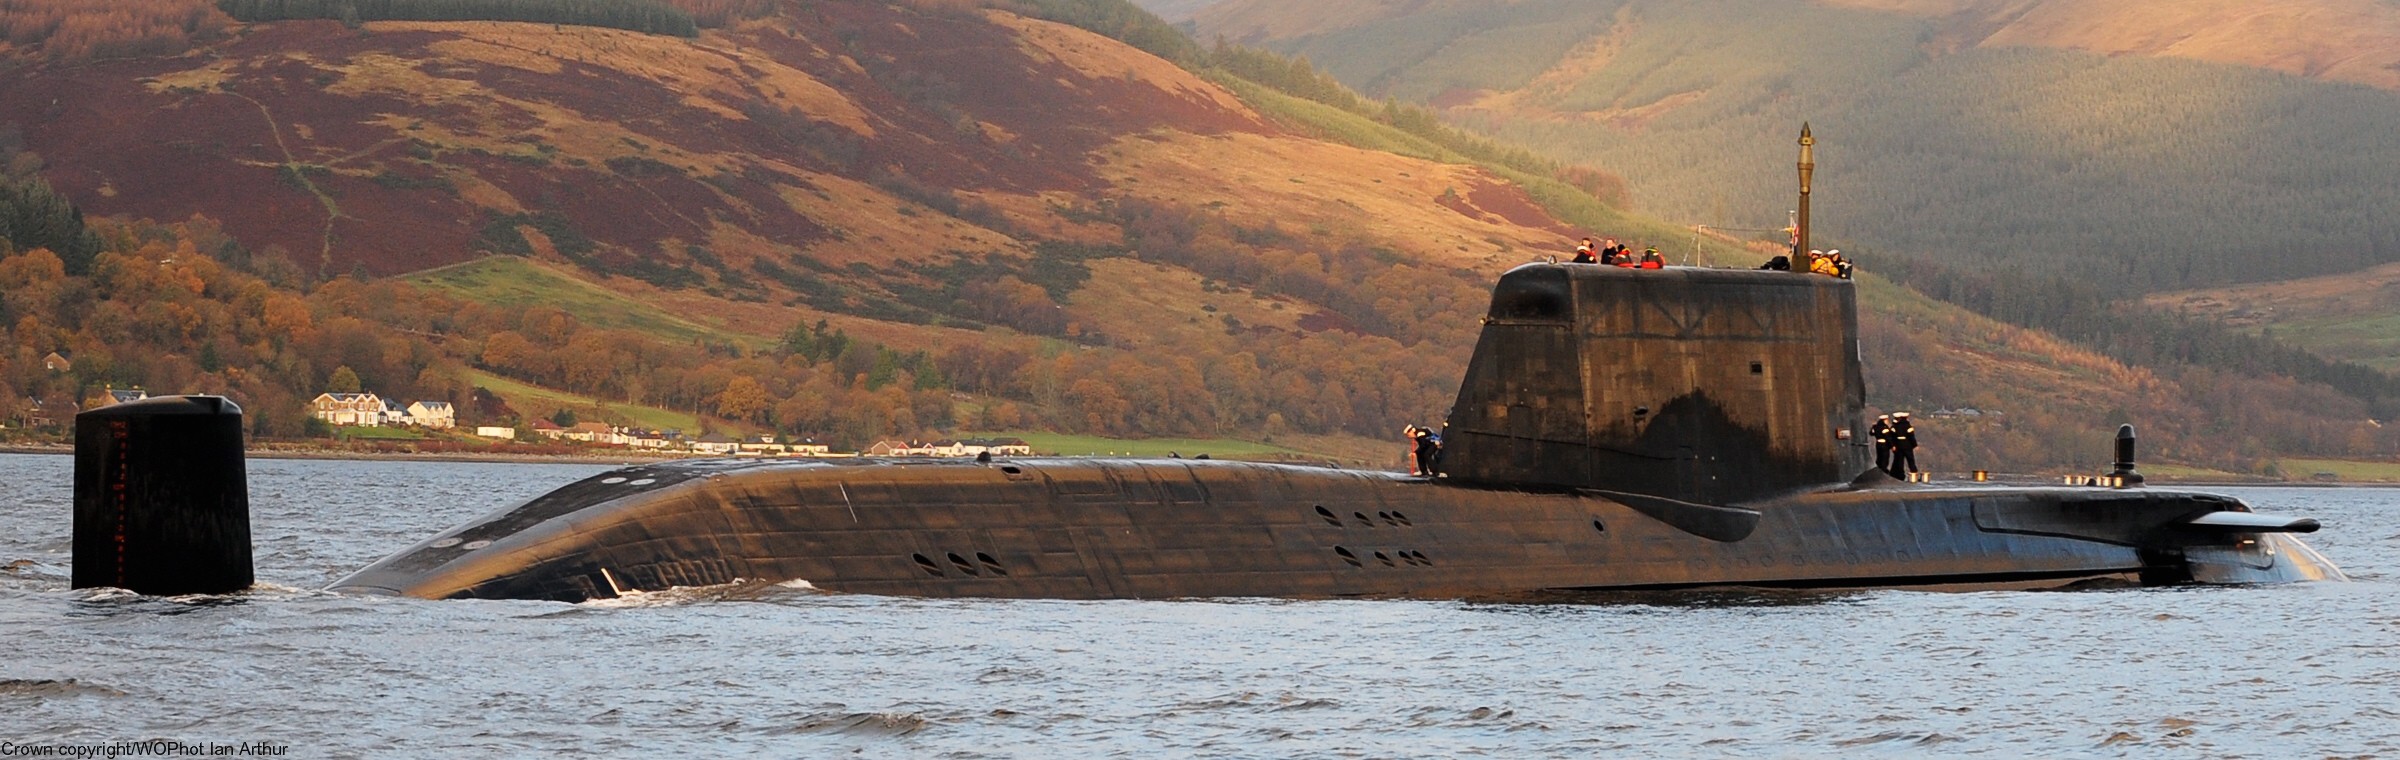 s-119 hms astute attack submarine royal navy 09